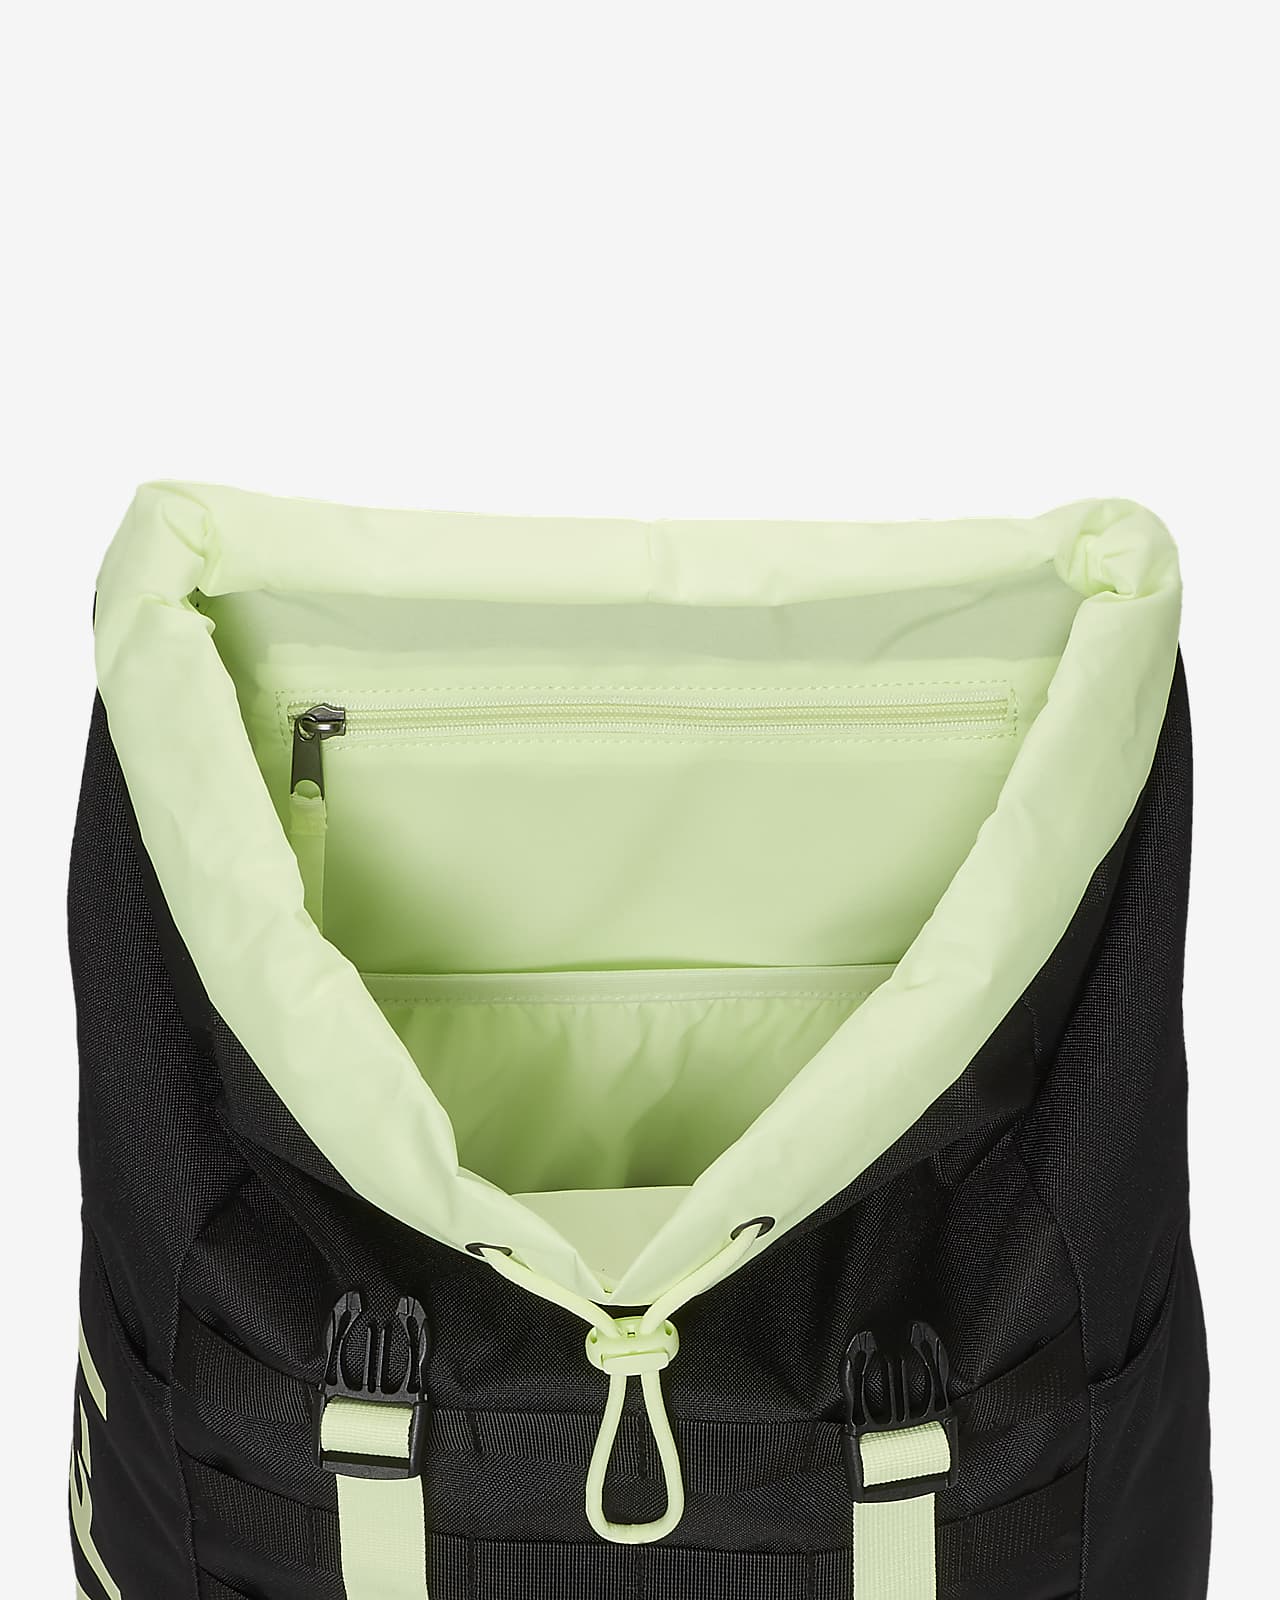 nike sportswear af1 backpack dimensions